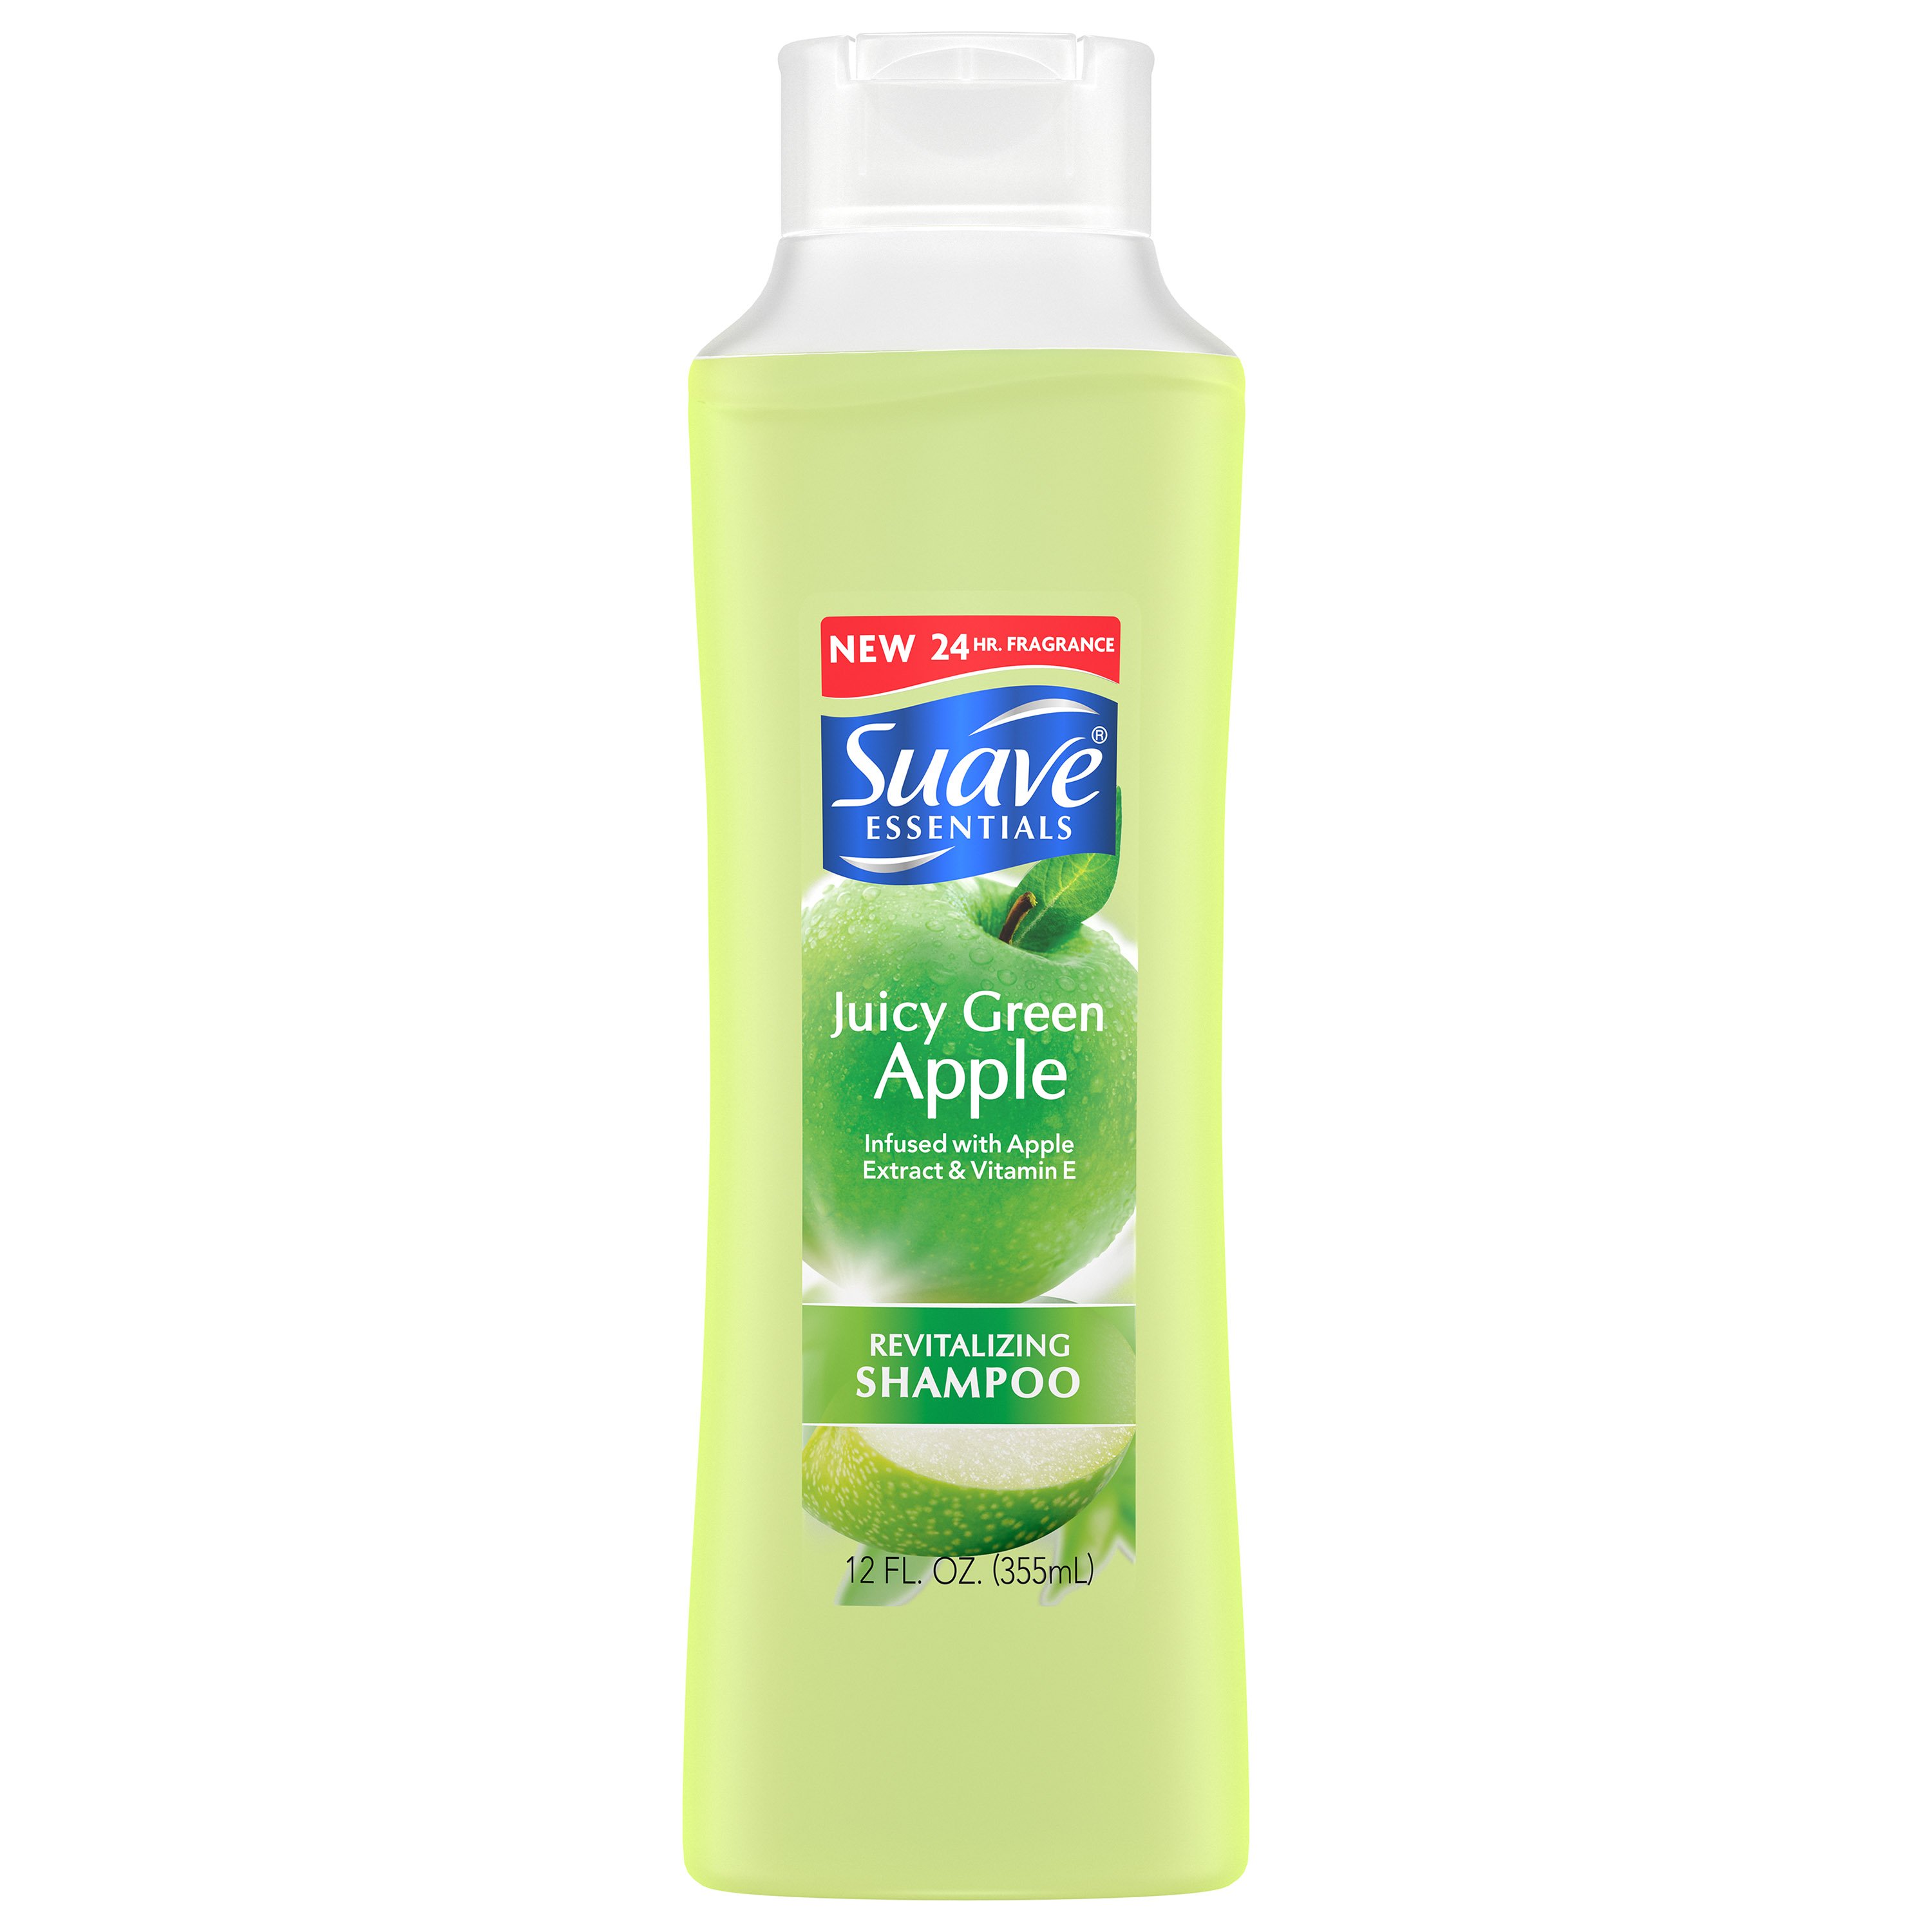 Suave Juicy Green Apple Shampoo - Shop Shampoo Conditioner H-E-B